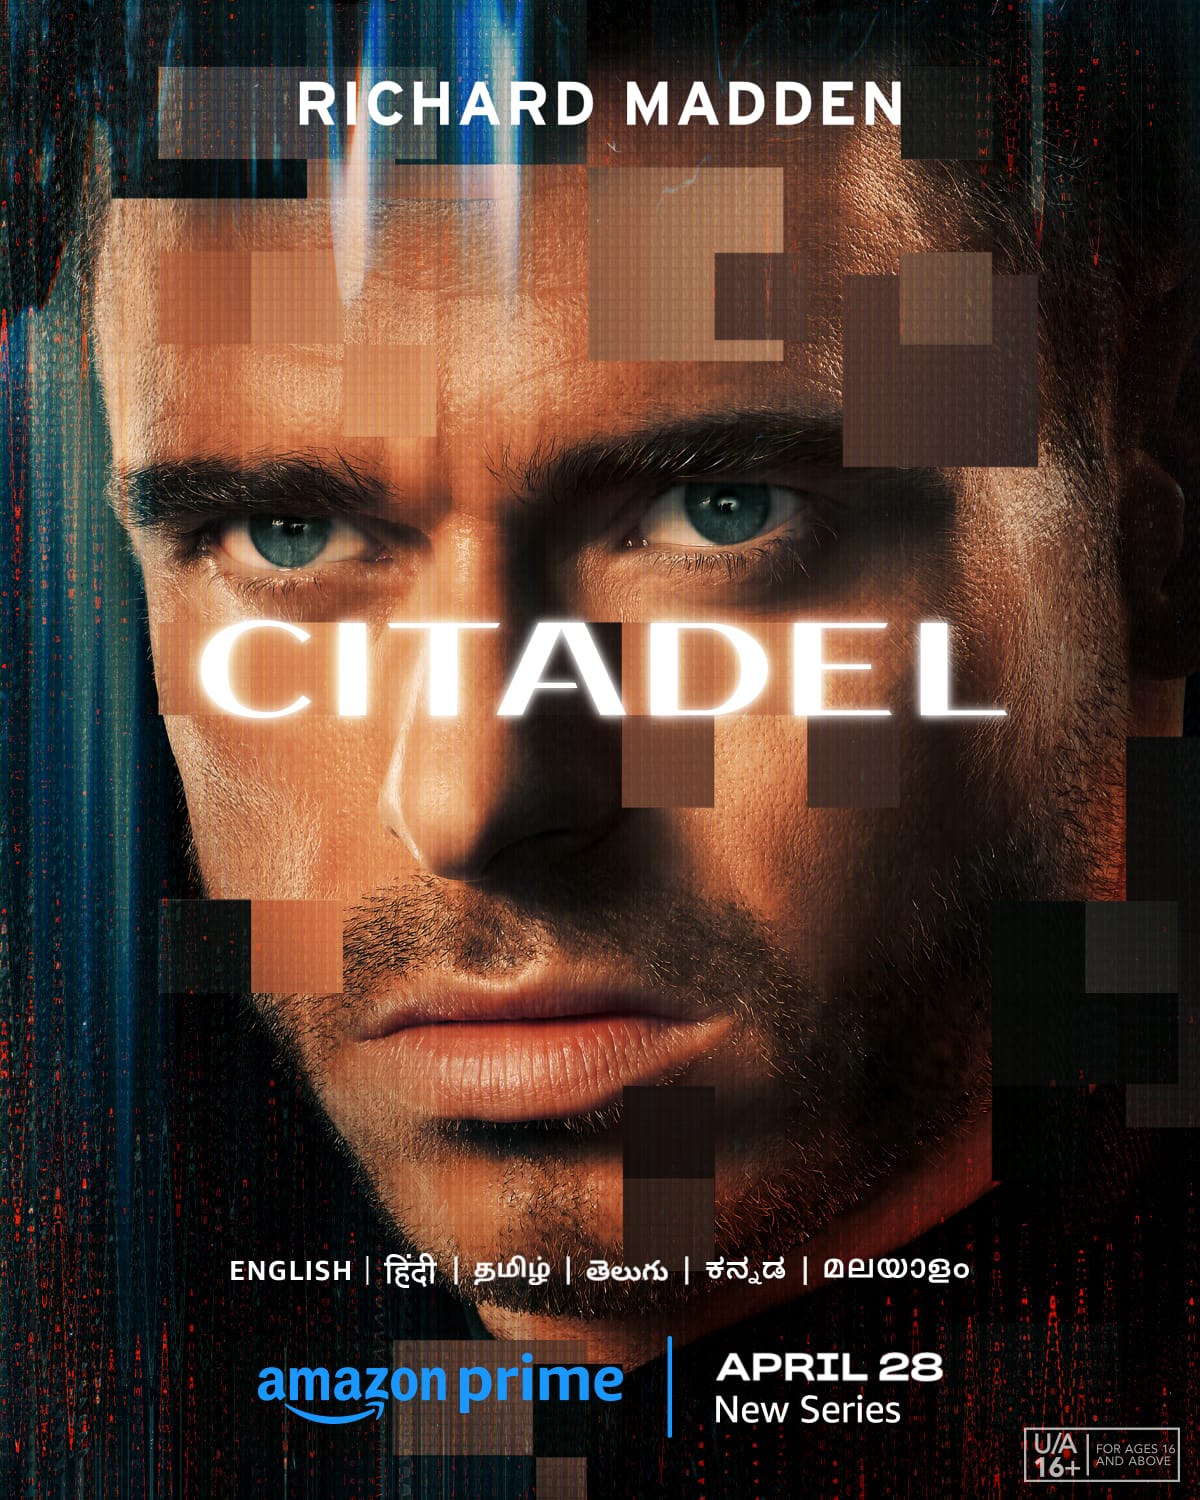 Richard Madden on Citadel (Credits - Amazon Prime)